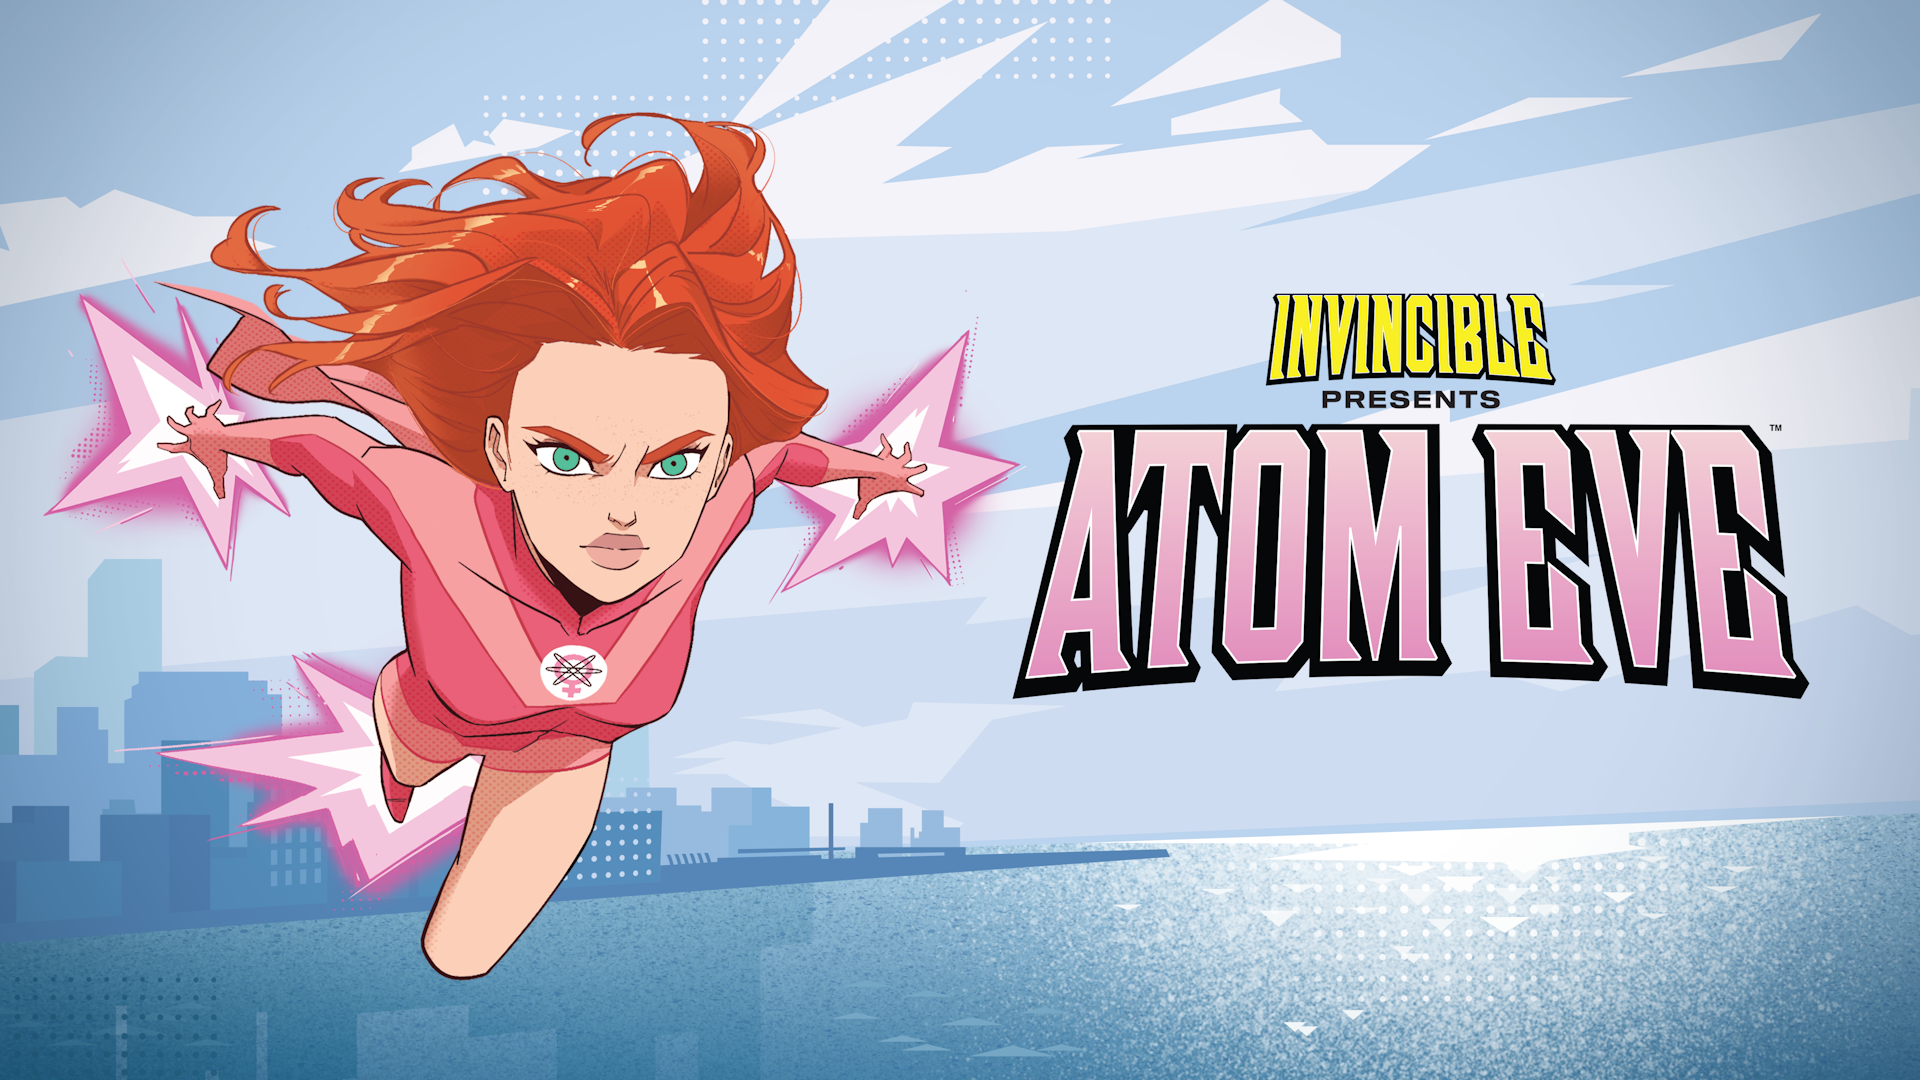 Arte principal do jogo de vídeo Invincible Presents: Atom Eve